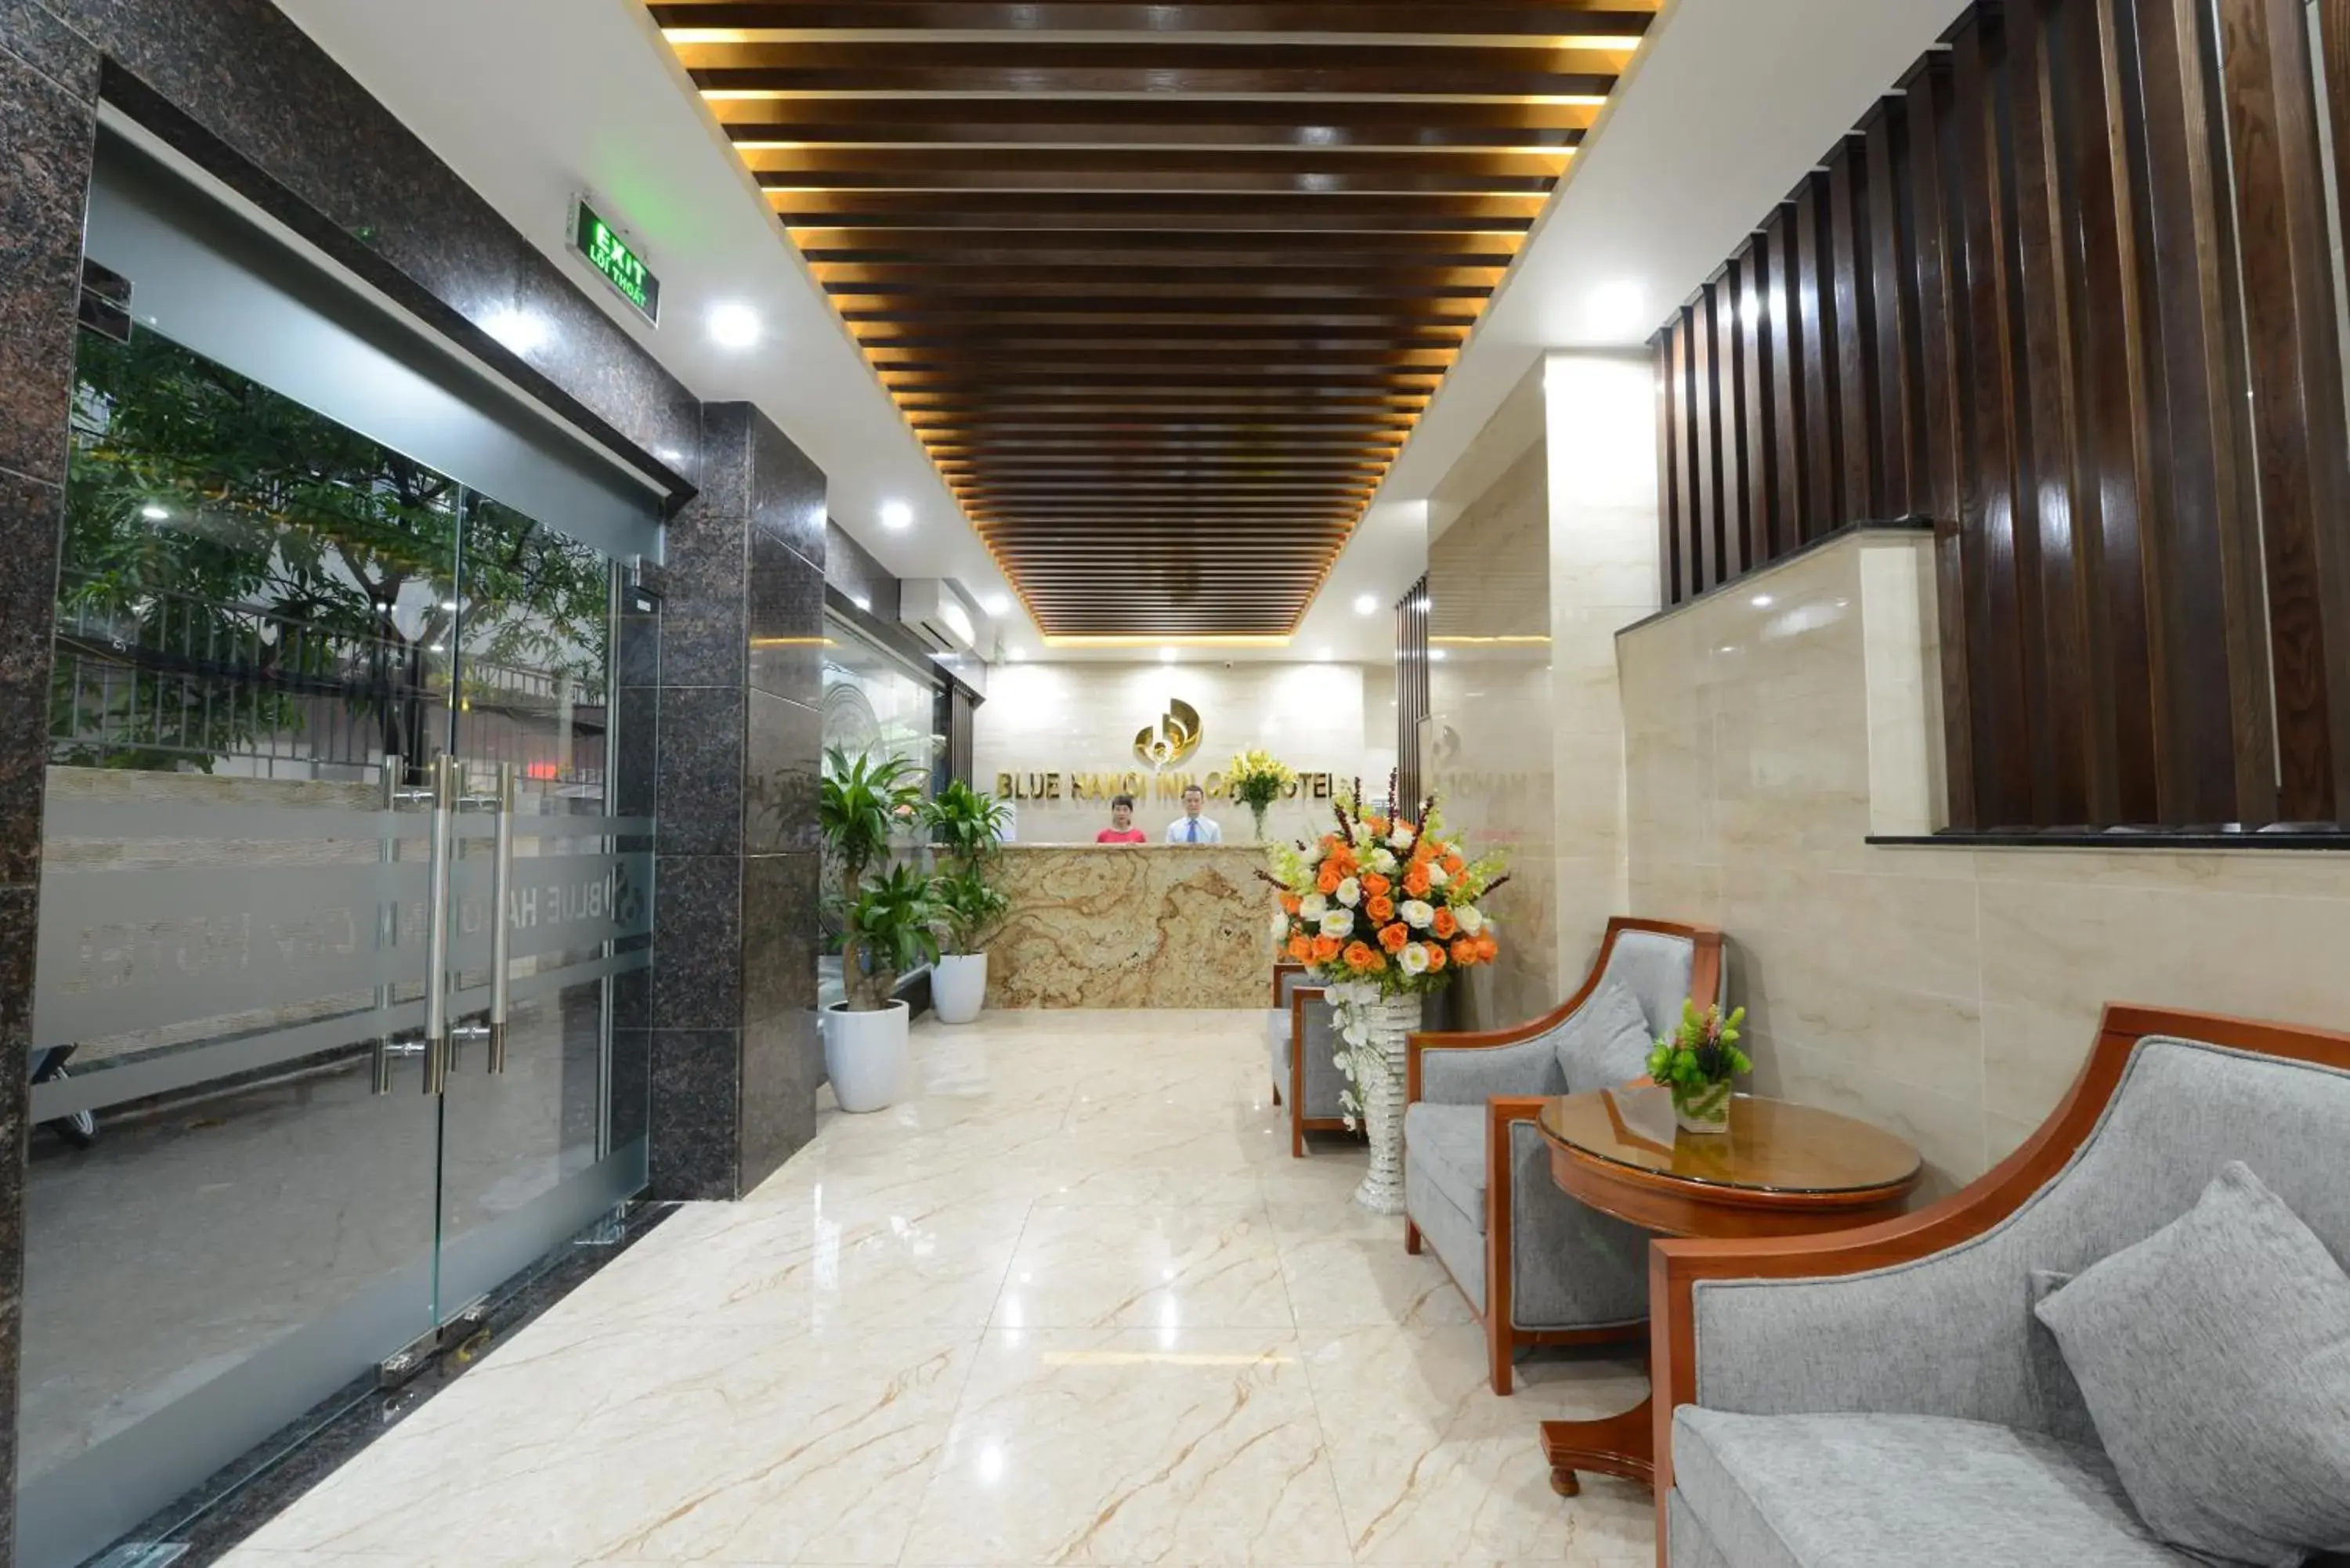 Lobby/Reception in Blue Hanoi Inn City Hotel